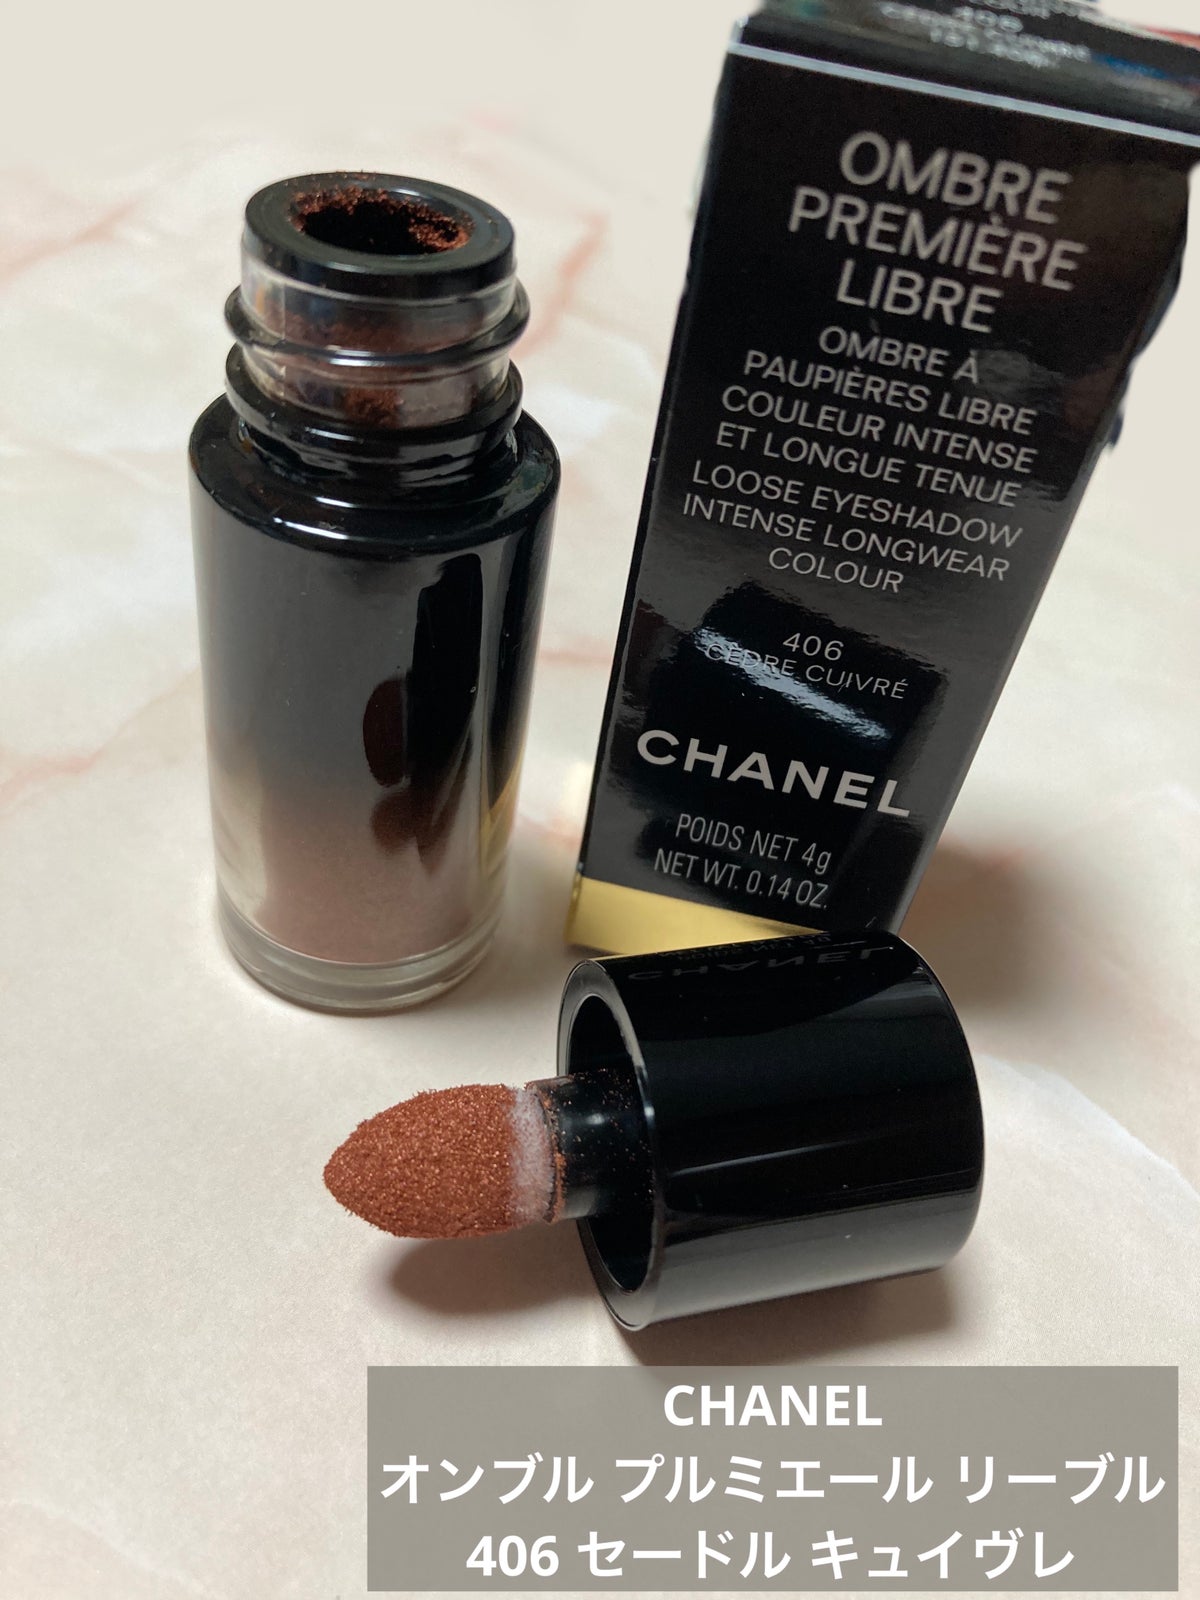 Worth It: Chanel Ombre Première Libre Loose Eyeshadow